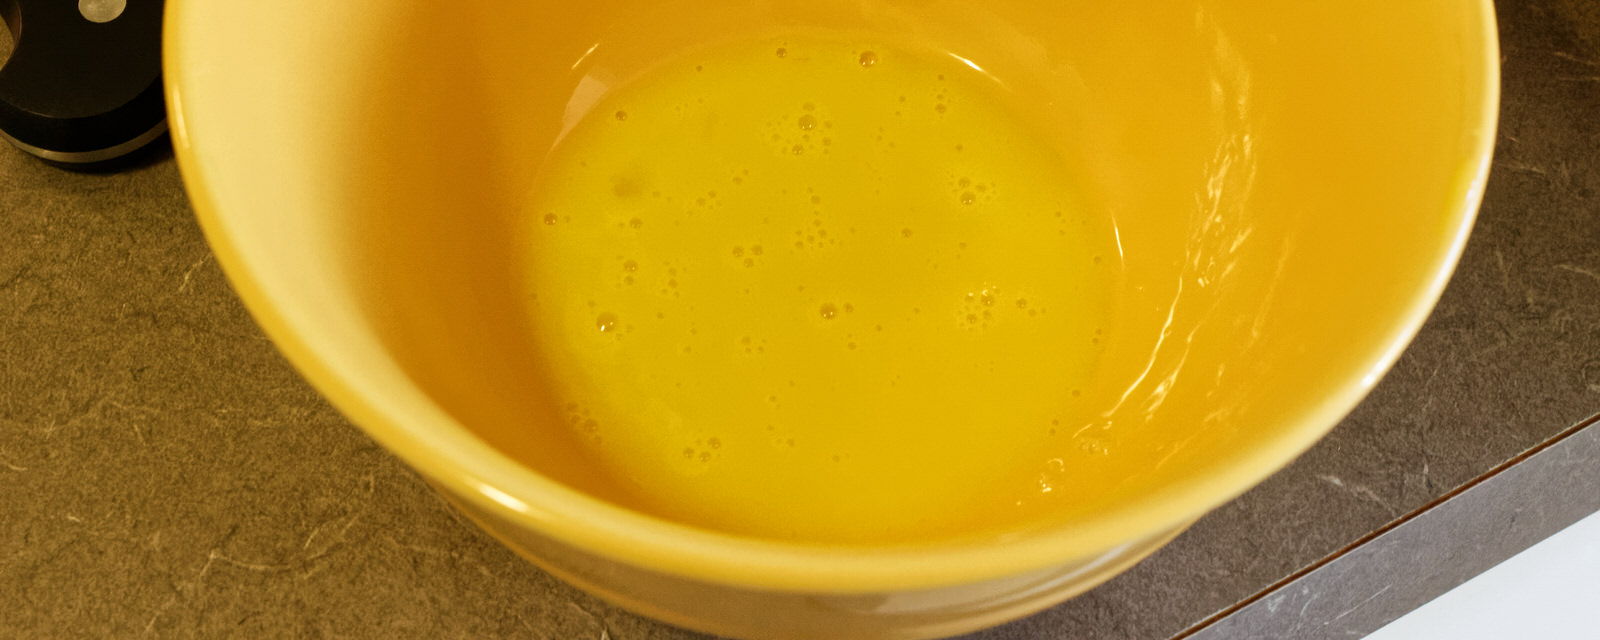 Beaten egg yolk in a yellow bowl